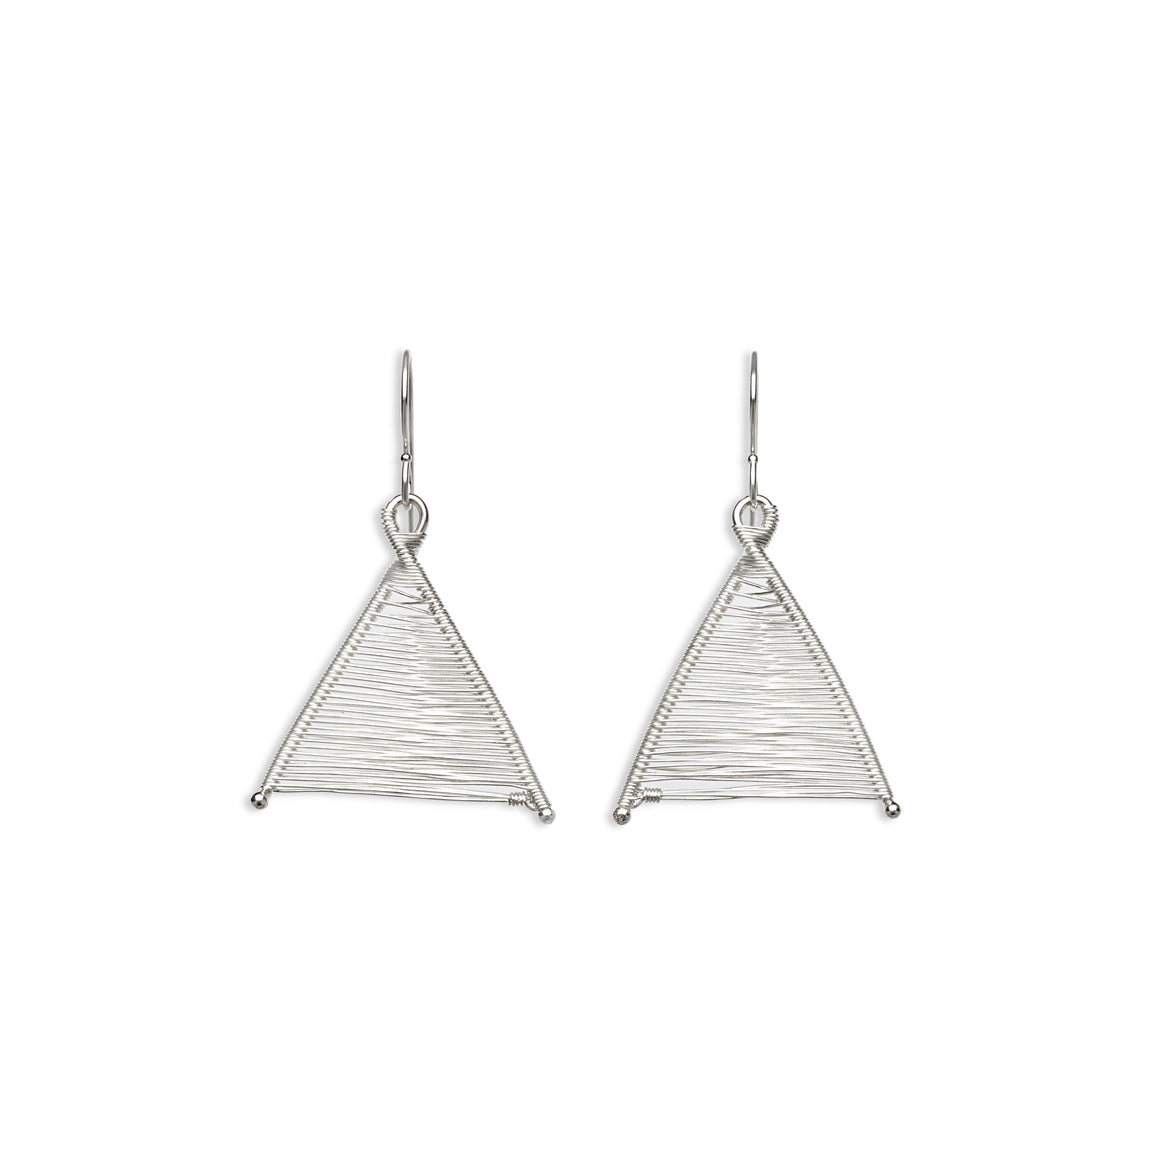 Original Sin Jewelry's Handmade Woven Wishbone Silver Dangle Triangle Earrings